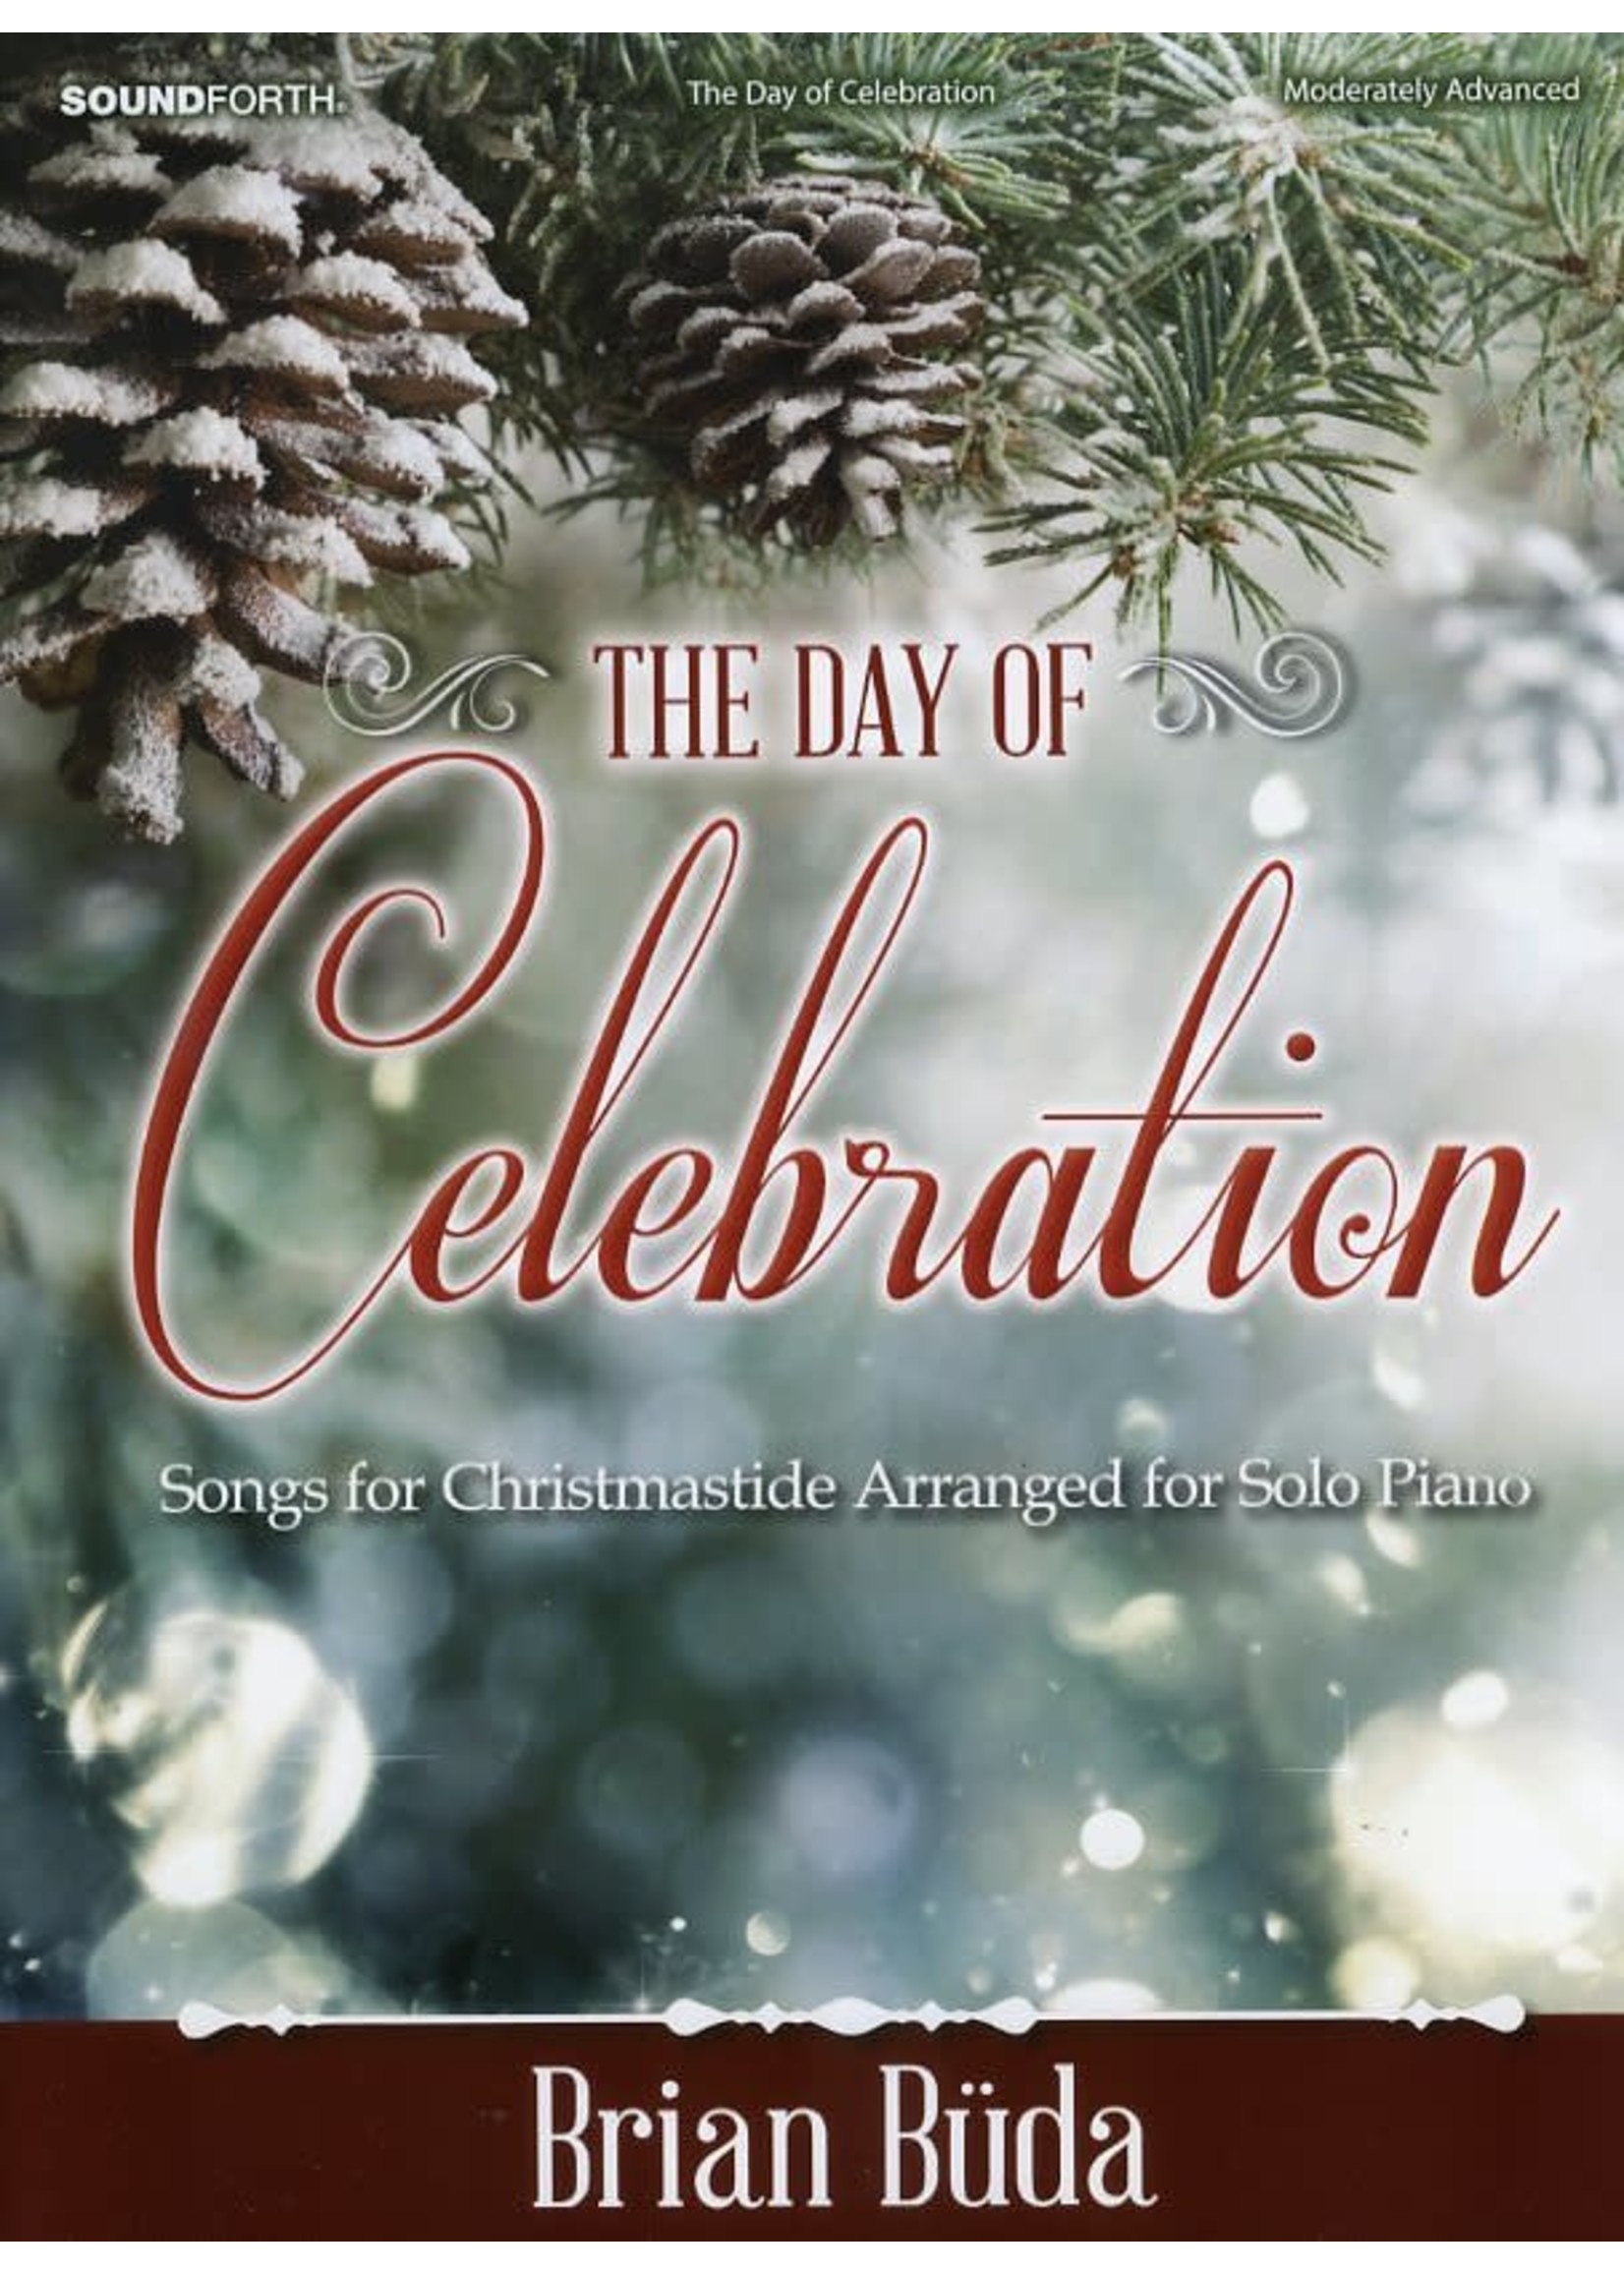 The Day of Celebration (Moderately Advanced Piano - Buda)